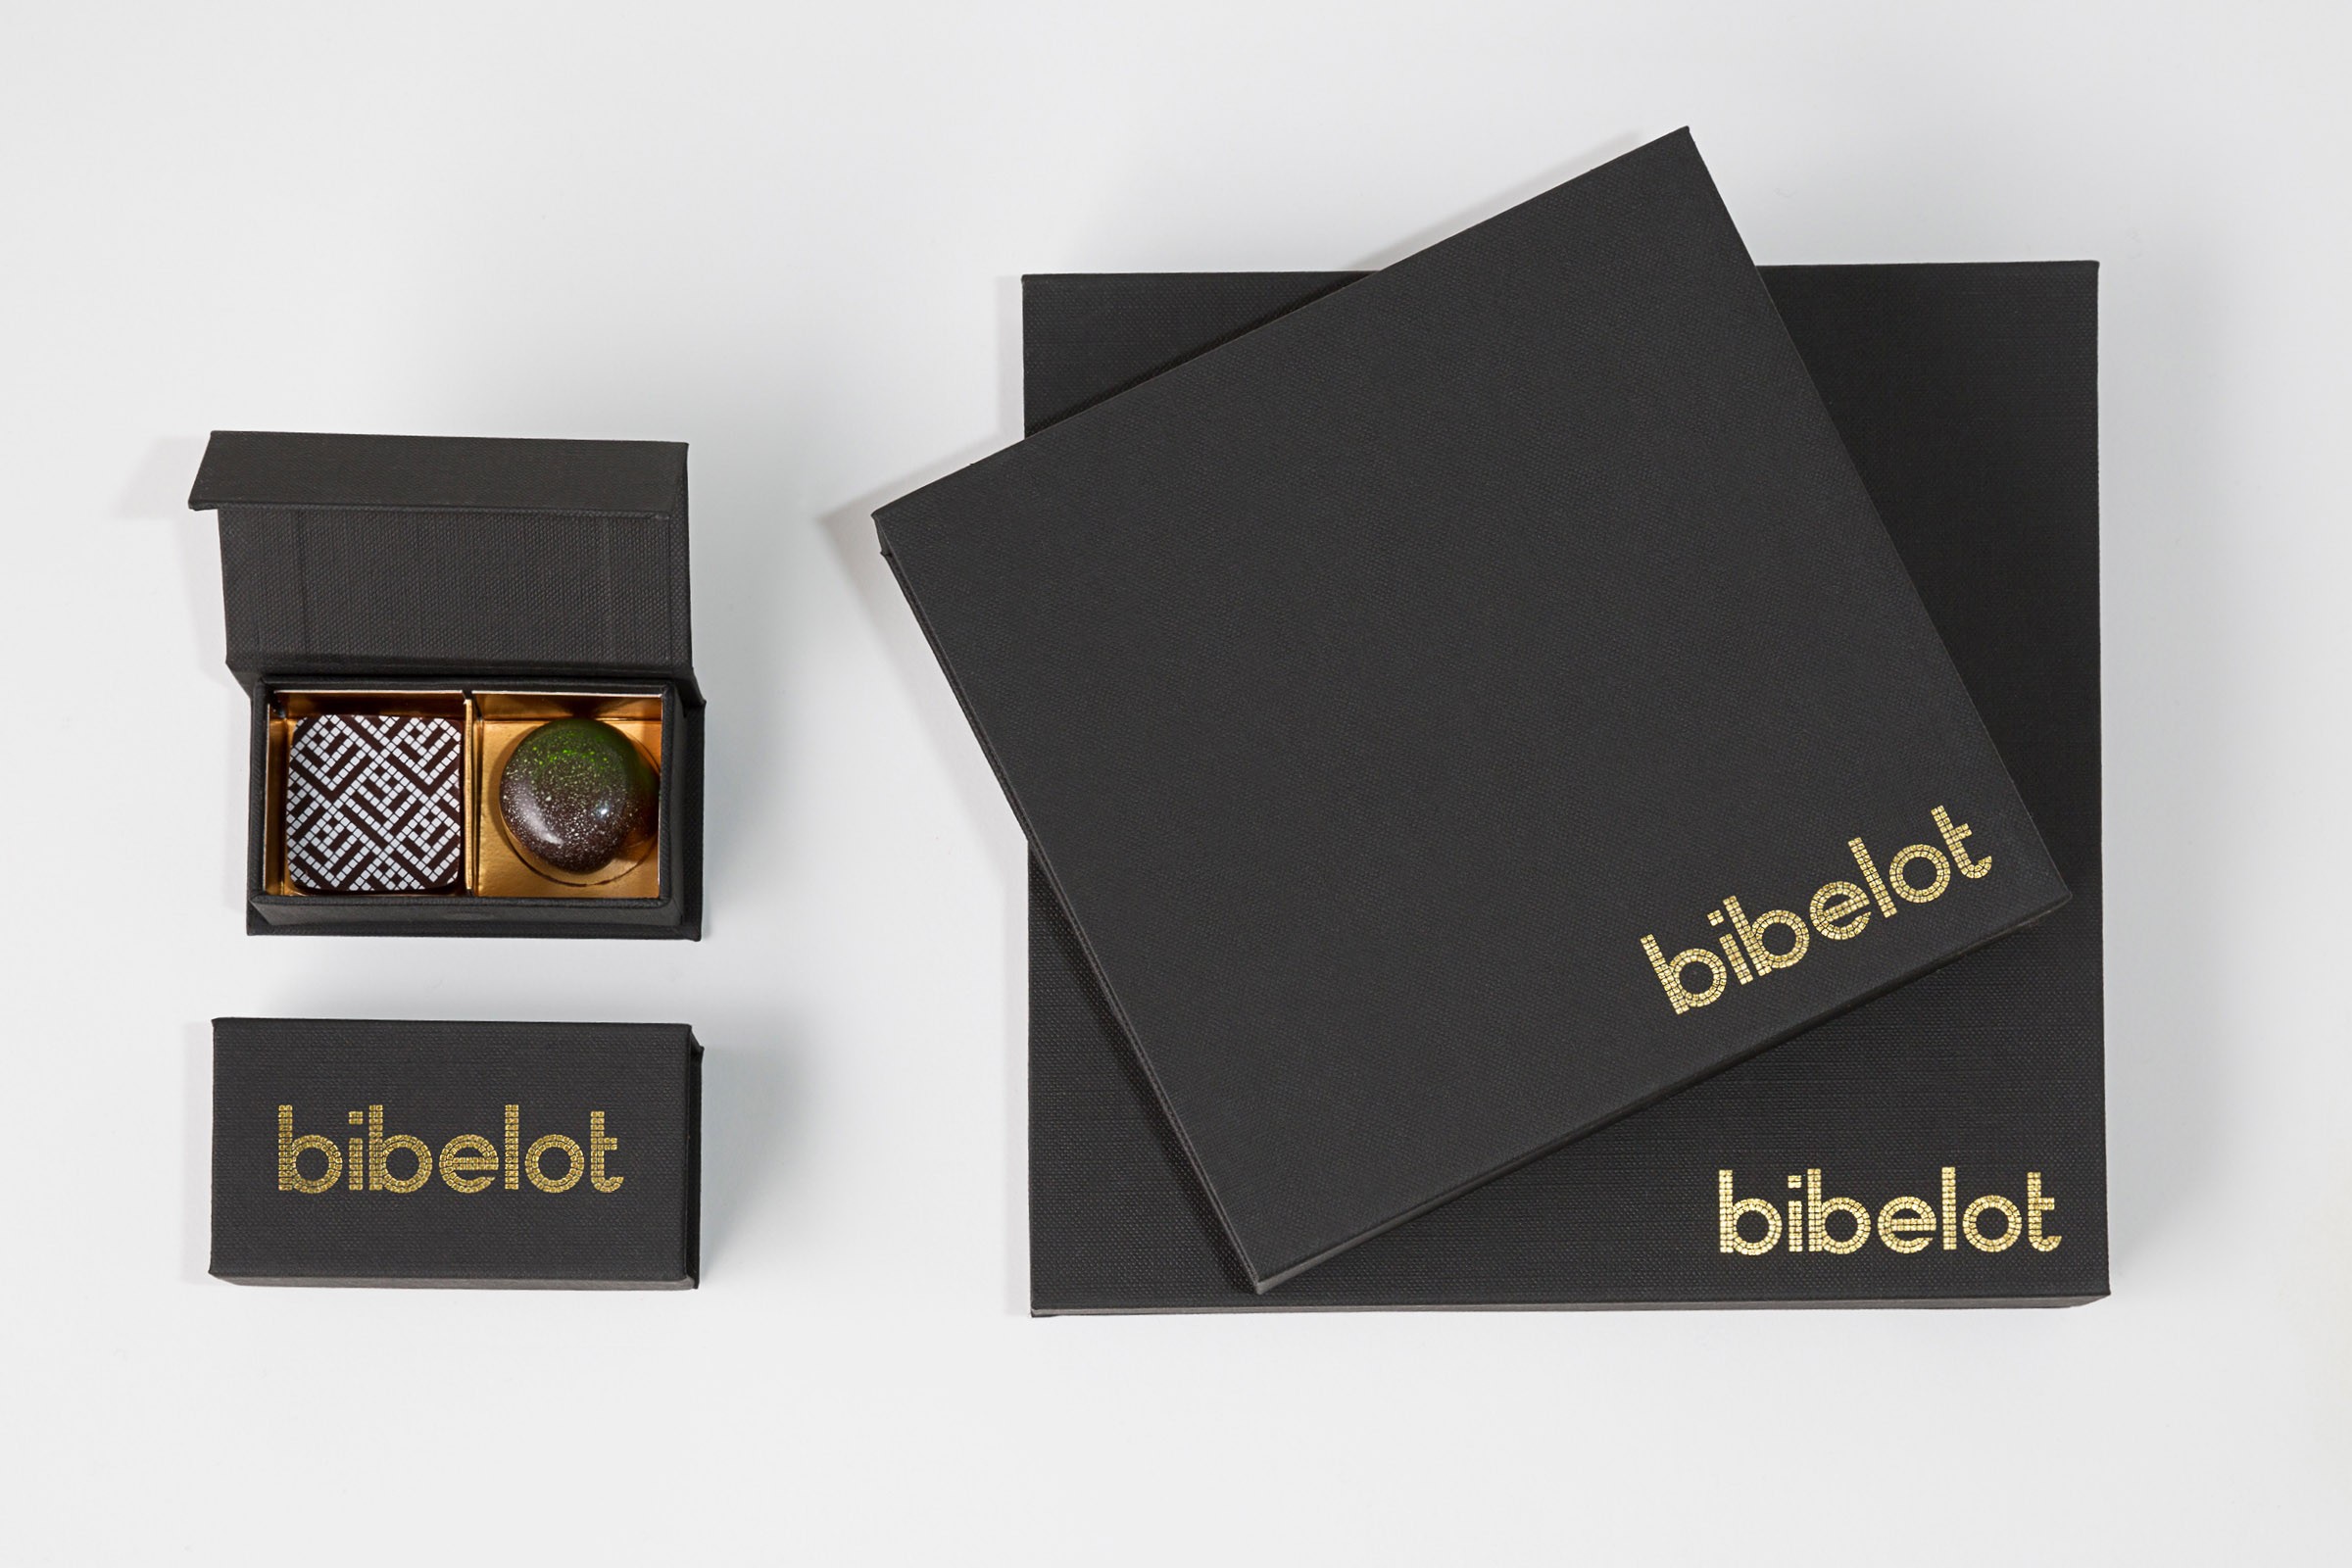 Bibelot patisserie branding and packaging designed by A Friend Of Mine